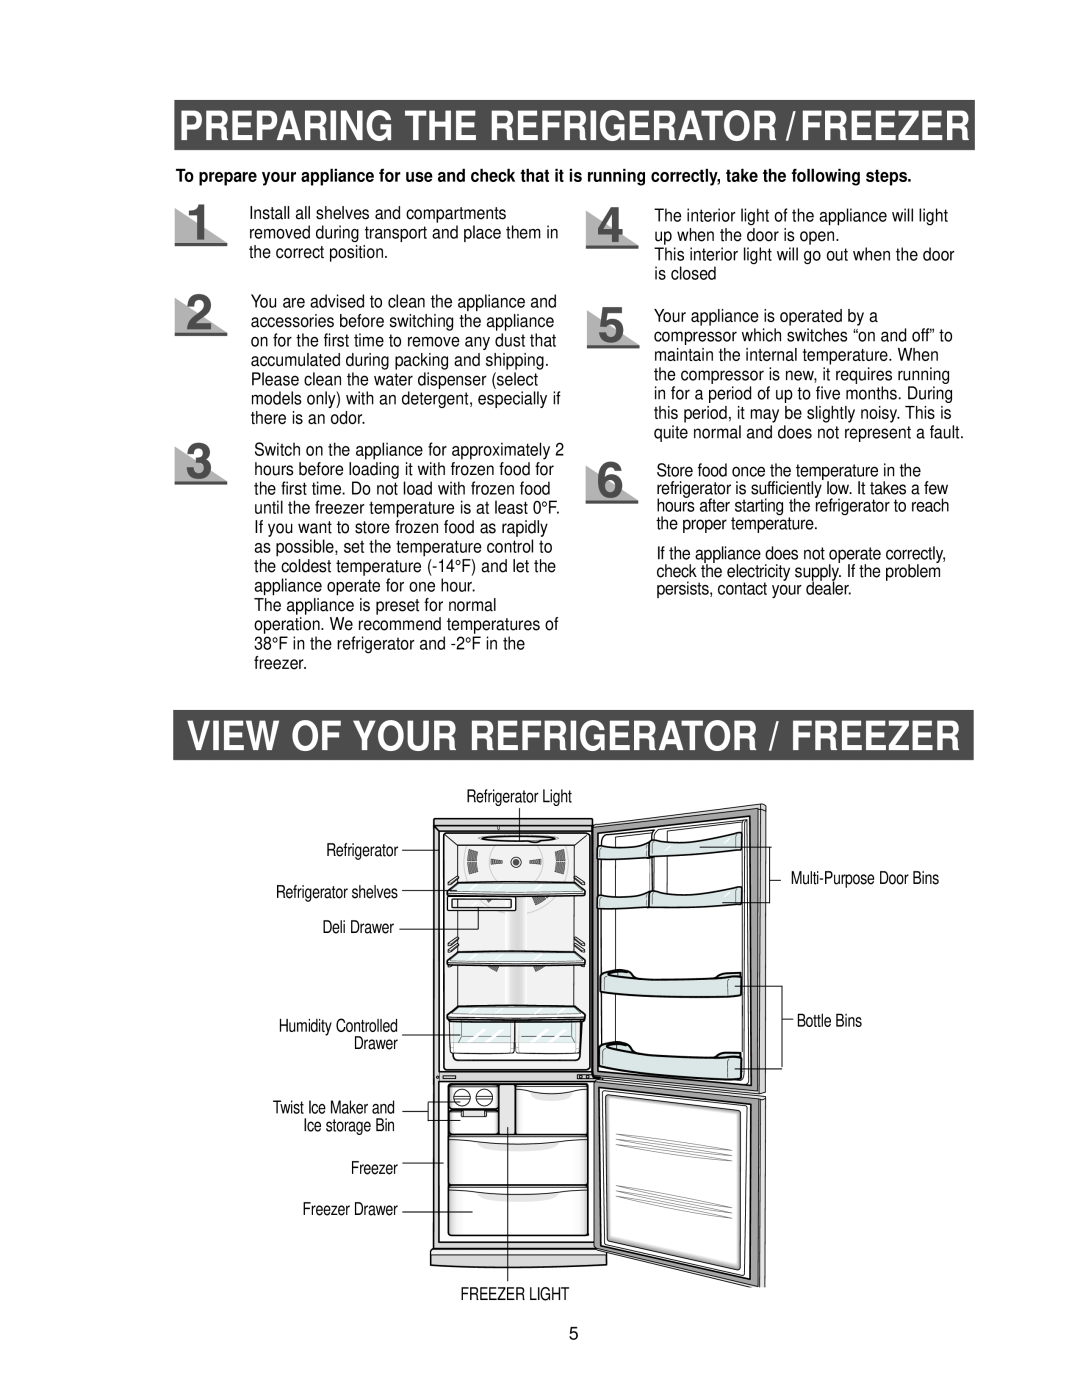 Samsung RB1955SW, RB1955SH, RB1944SL, RB2155SW Preparing The Refrigerator /Freezer, View Of Your Refrigerator / Freezer 